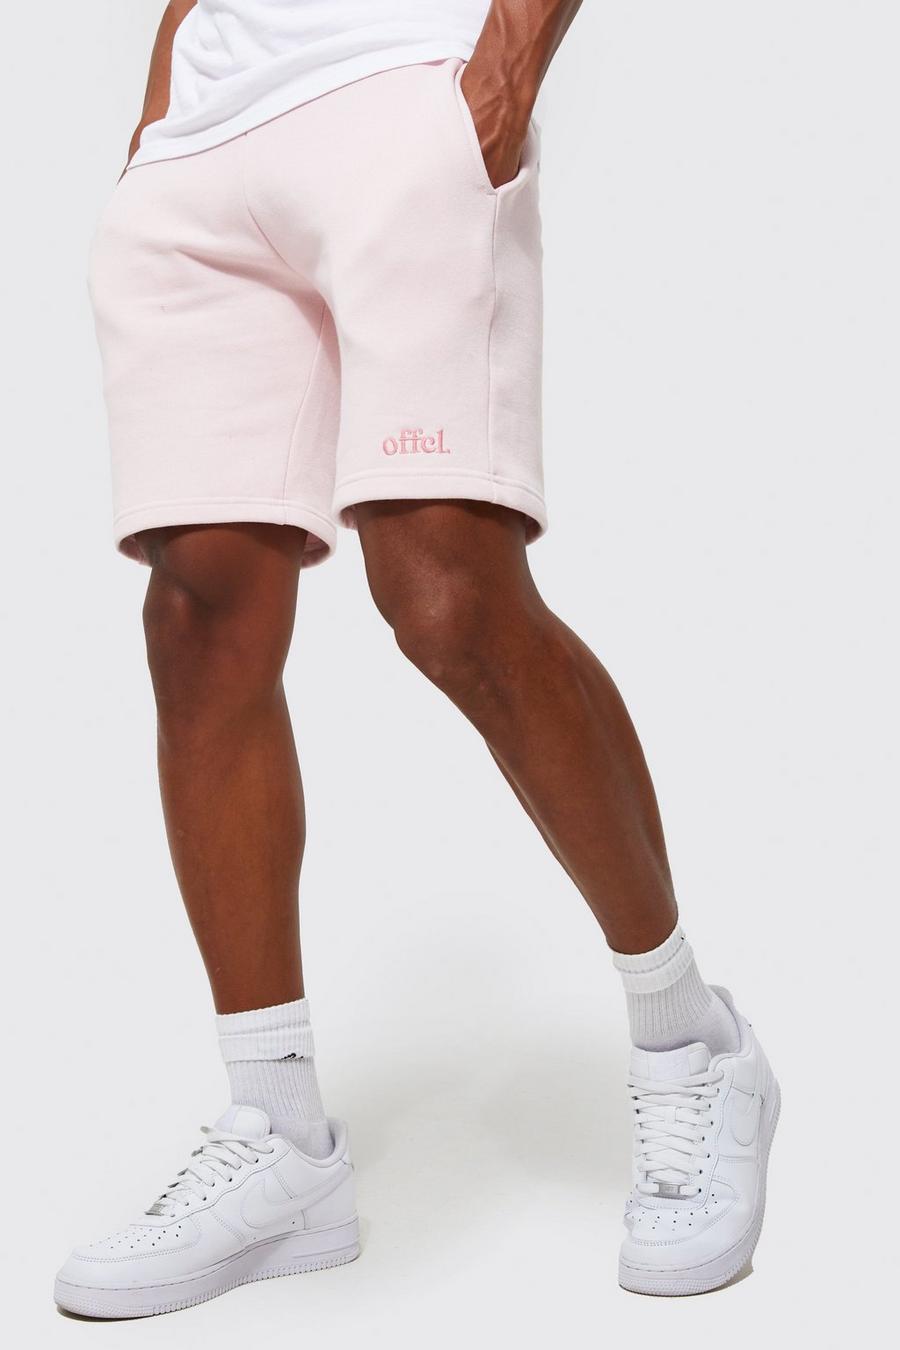 Official Jersey-Shorts, Light pink rose